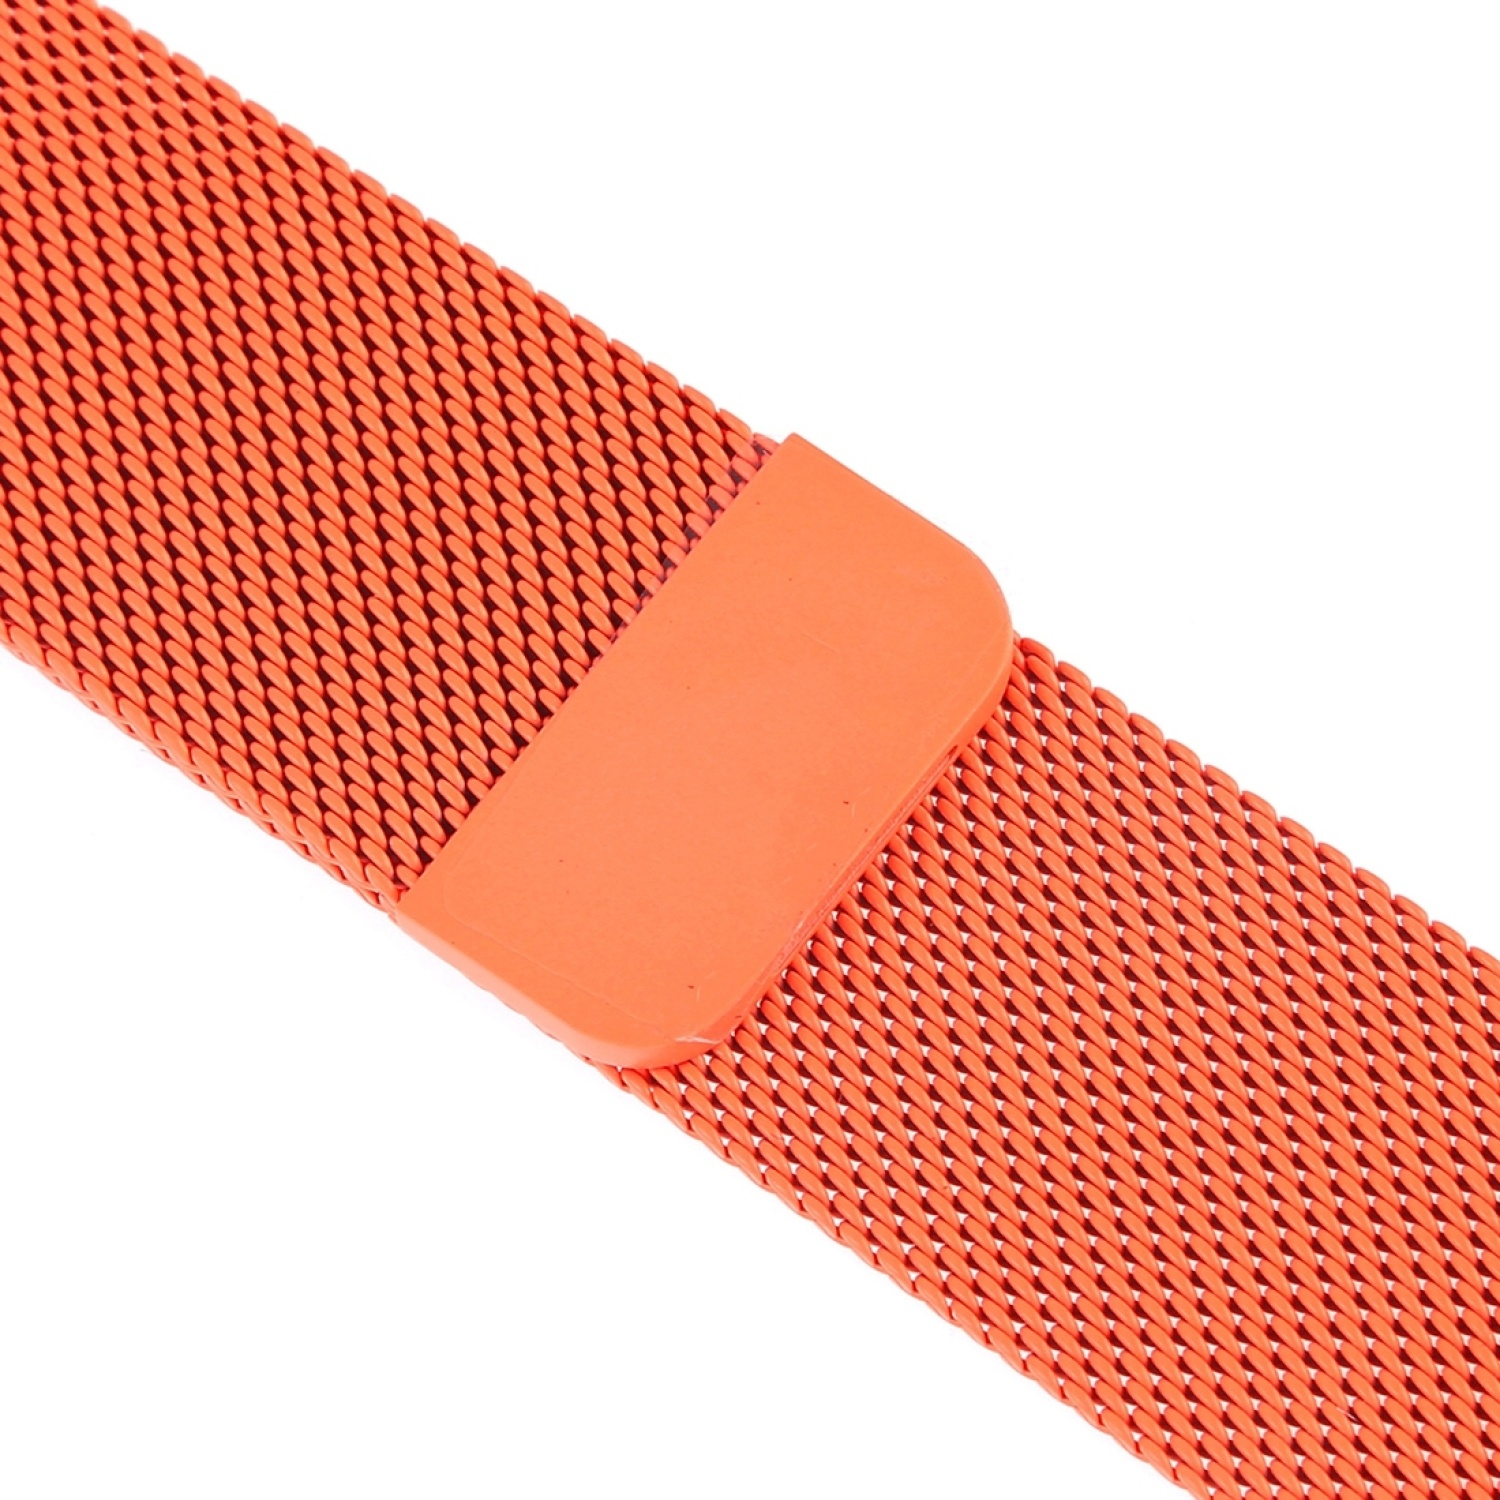 KÖNIG DESIGN Sportarmband, Watch Orange Apple, Smartband, 7 Series 41mm